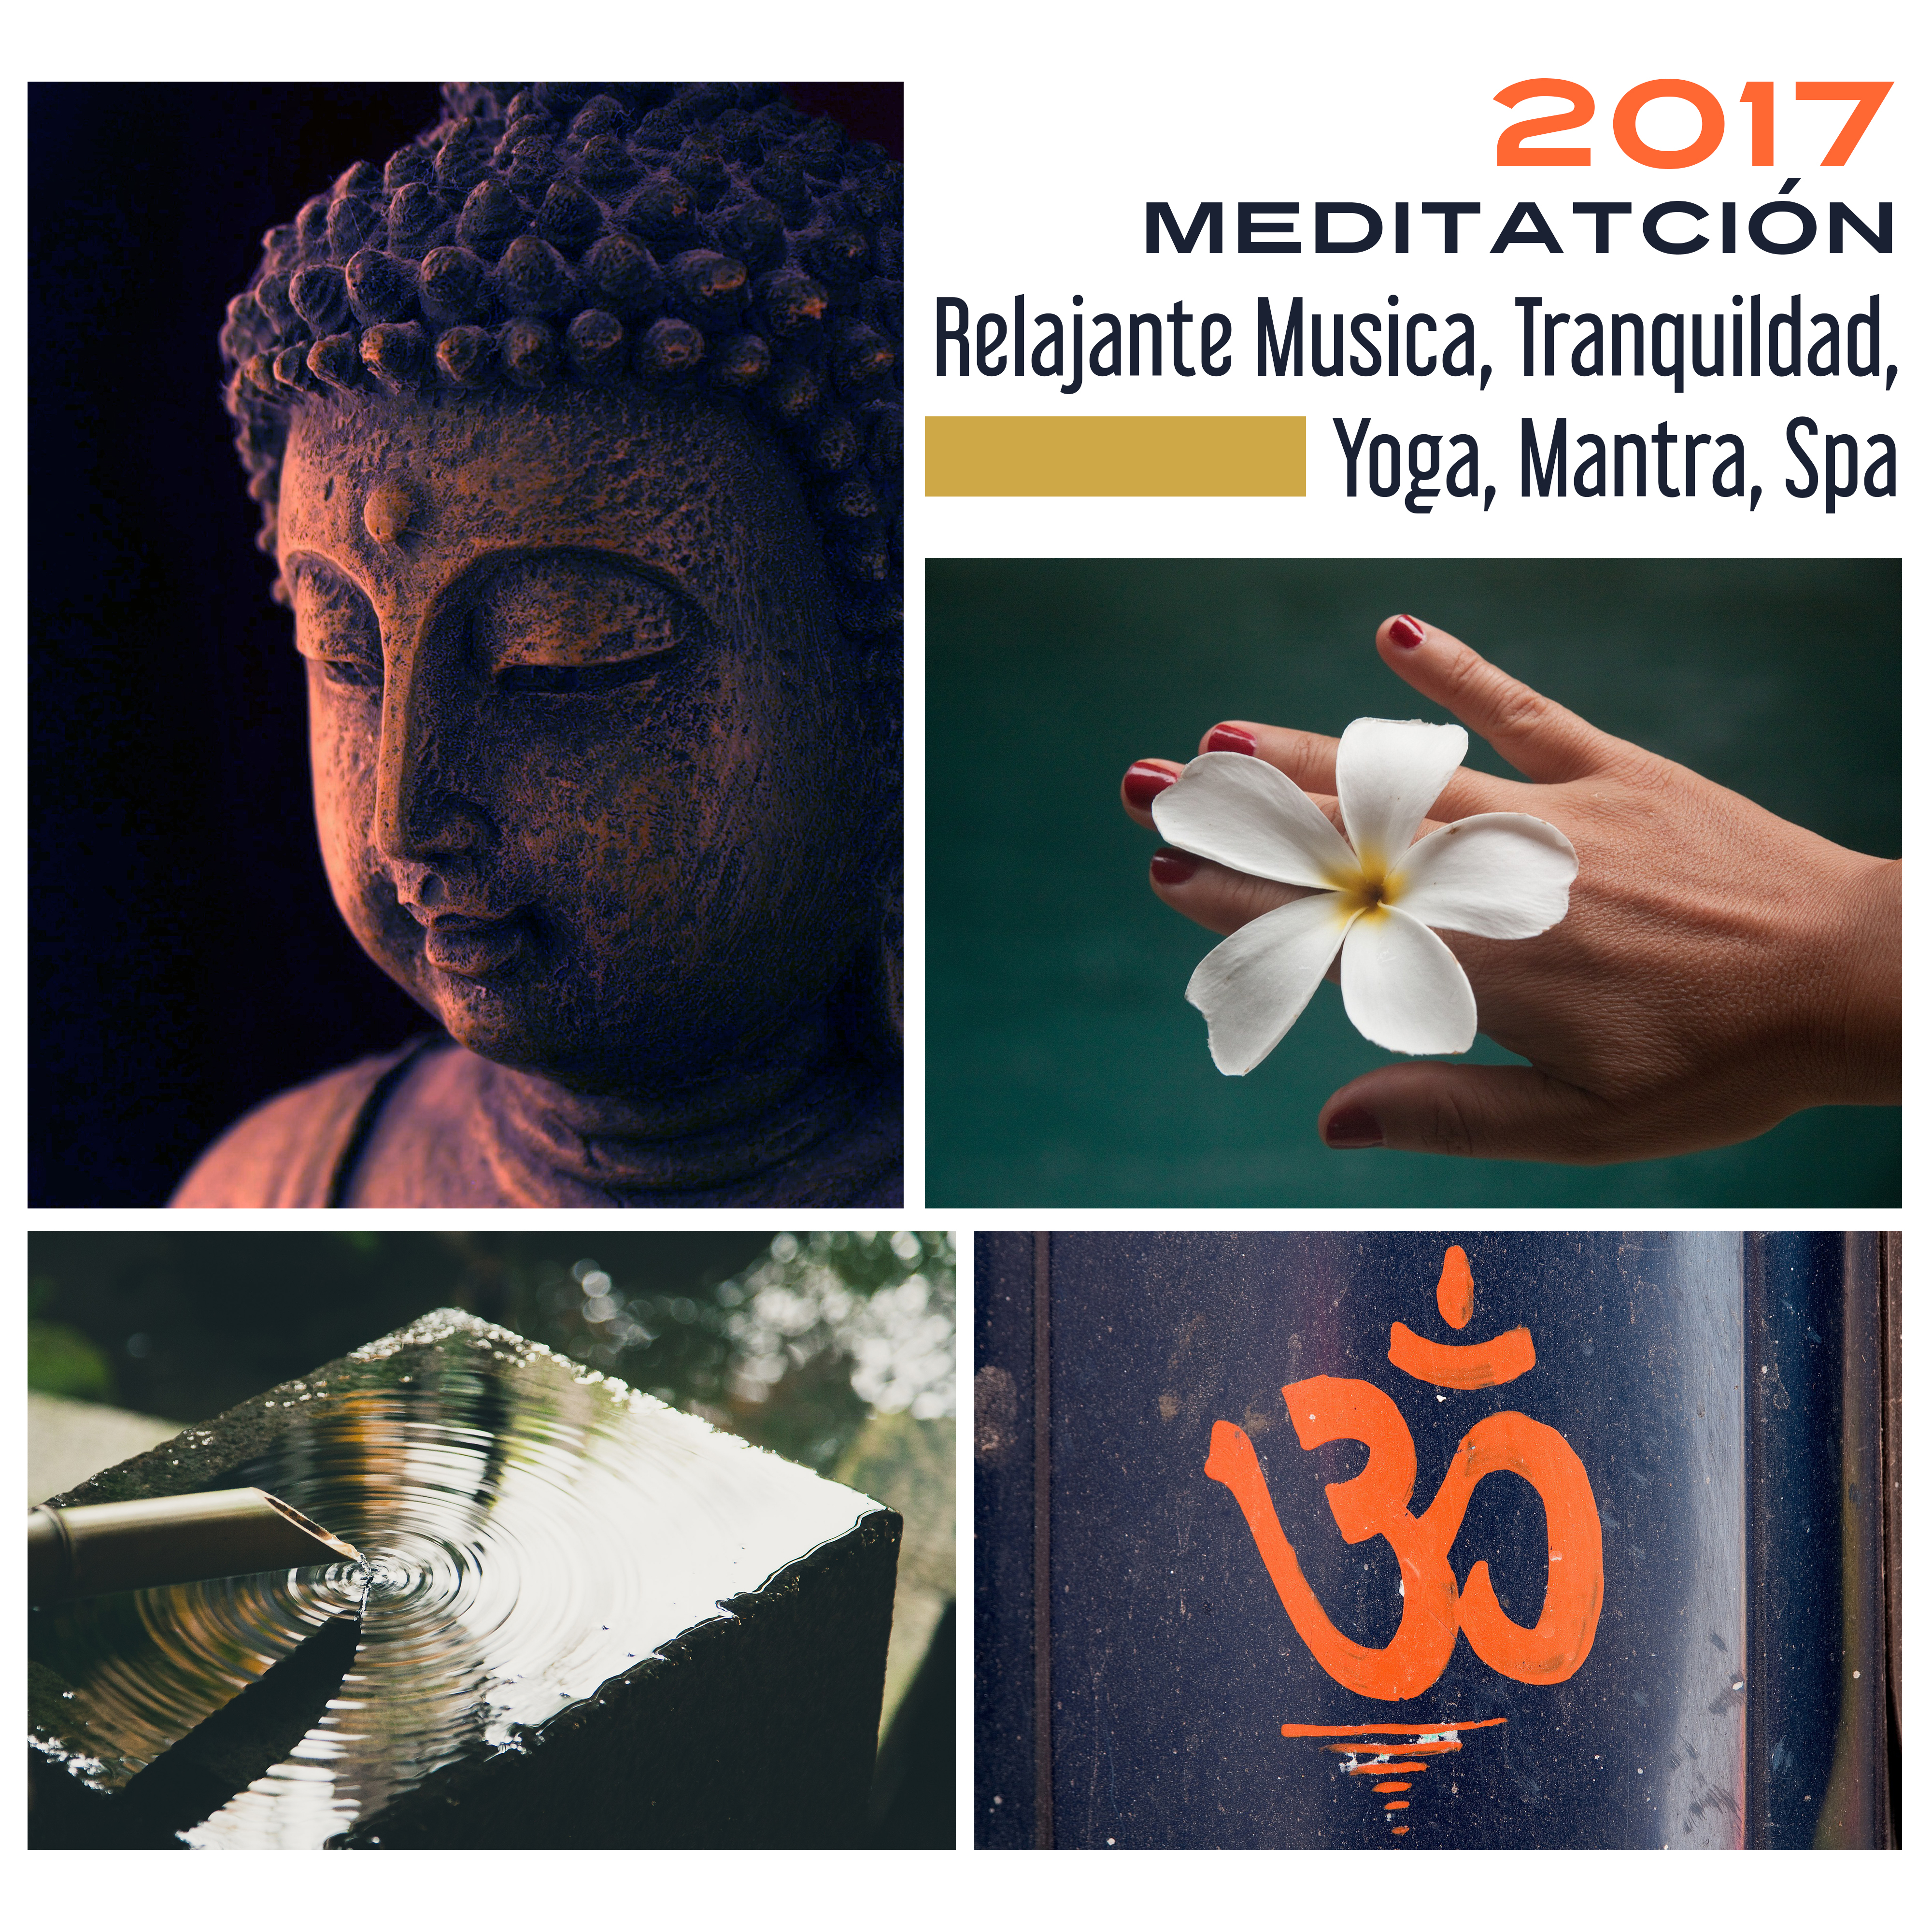 2017 Meditatcio n: Relajante Musica, Tranquildad, Yoga, Mantra, Spa